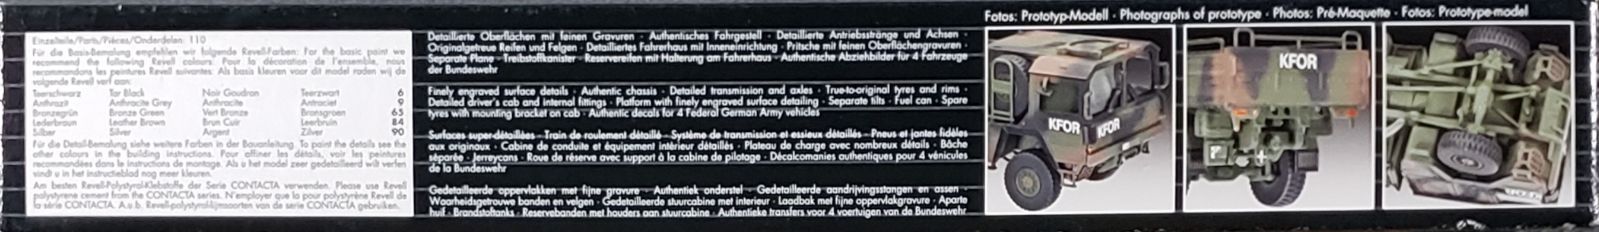 LKW 5t. mil gl (4x4) 1/72 ドイツレベル